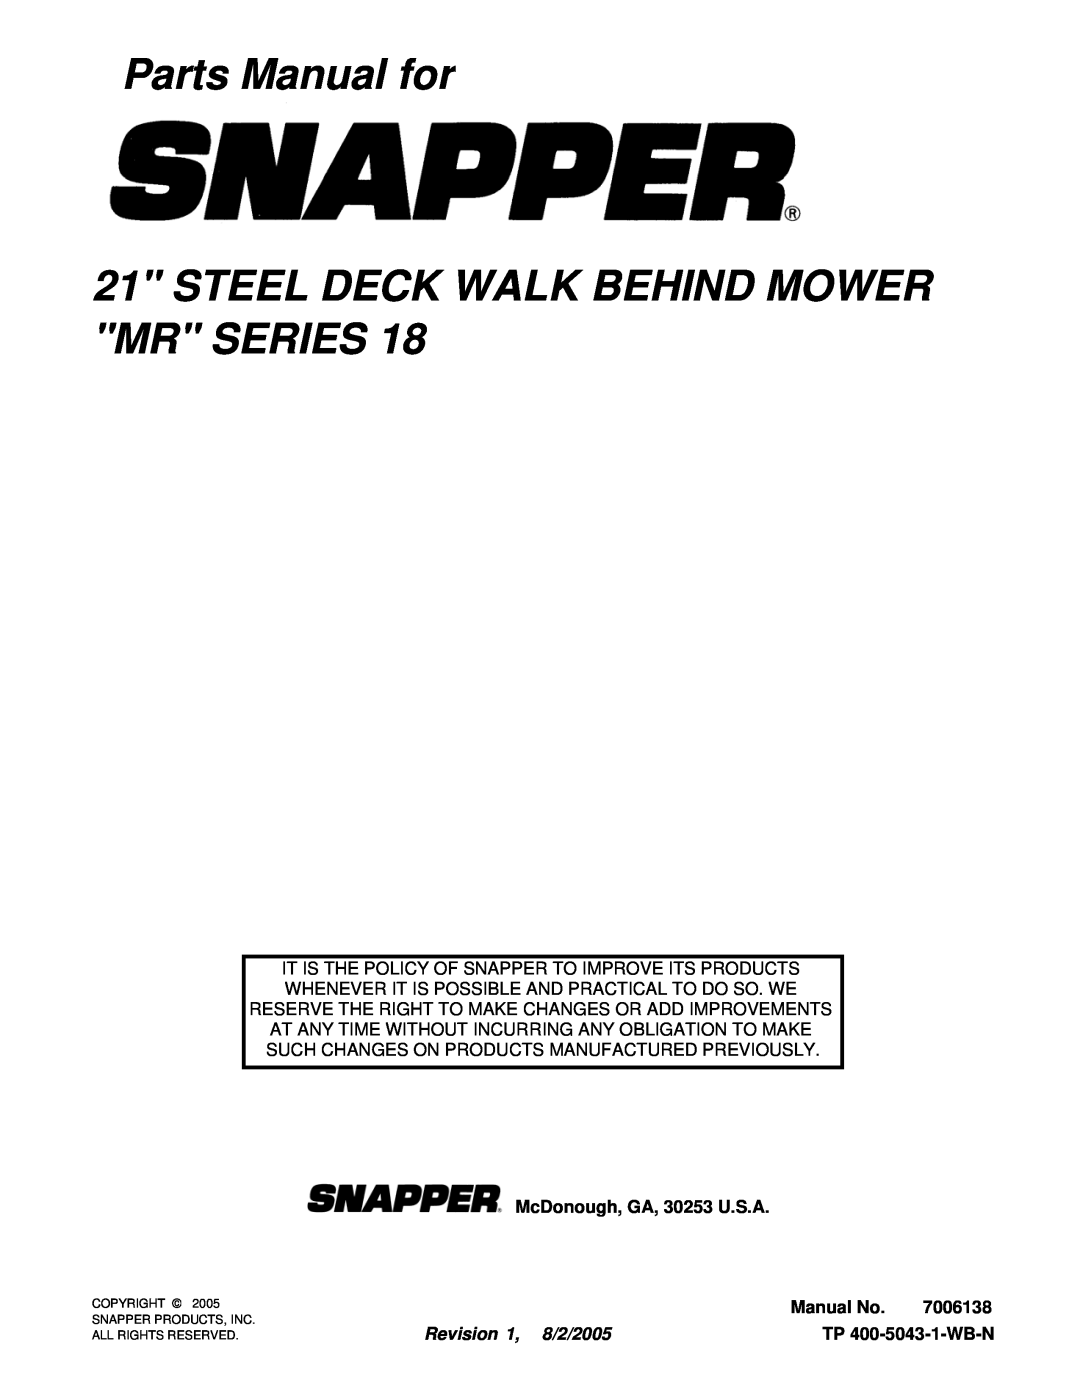 Snapper MRP216518B manual Parts Manual for, Steel Deck Walk Behind Mower Mr Series, McDonough, GA, 30253 U.S.A, Manual No 